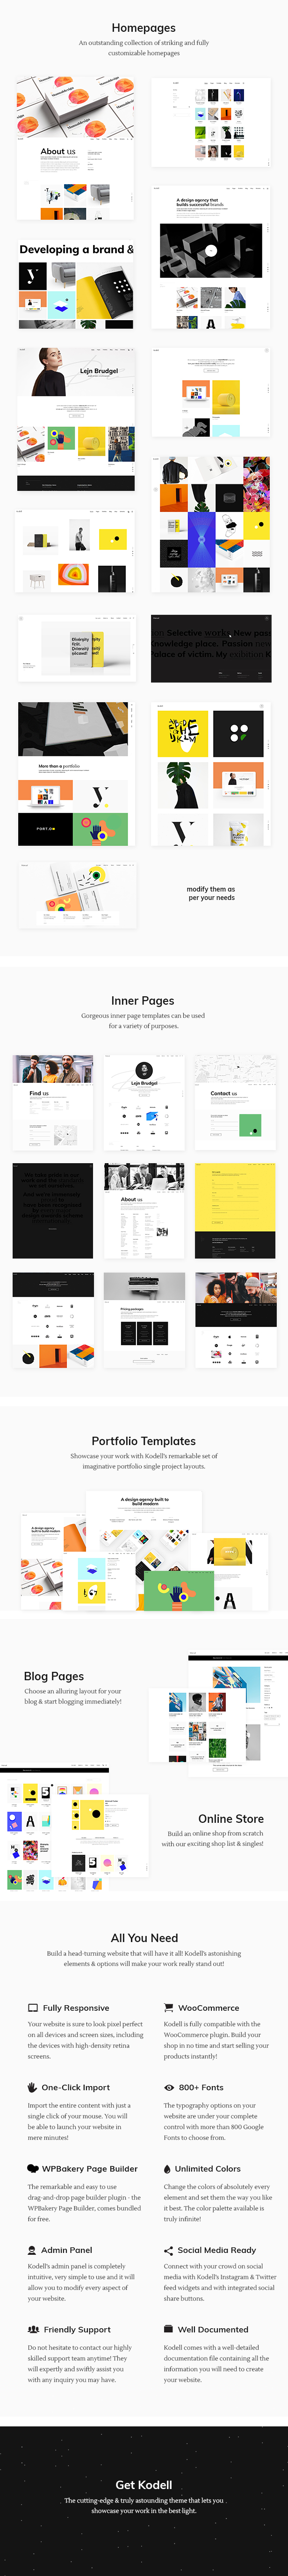 Kodell - Creative Portfolio Theme for Designers and Agencies - 1